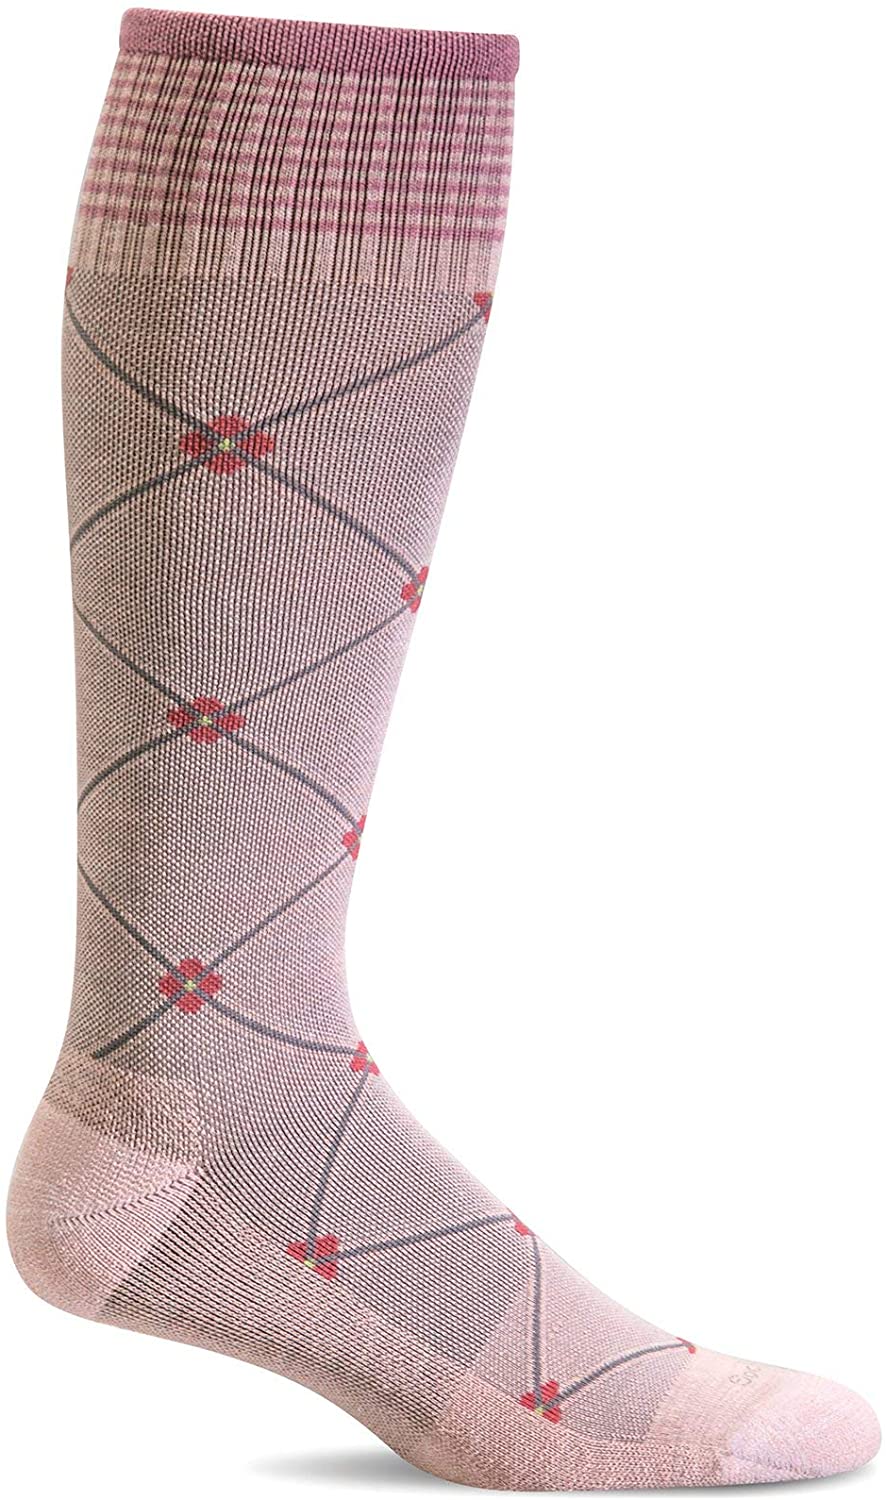 Women's Sockwell Elevation Firm Graduated Compression Socks